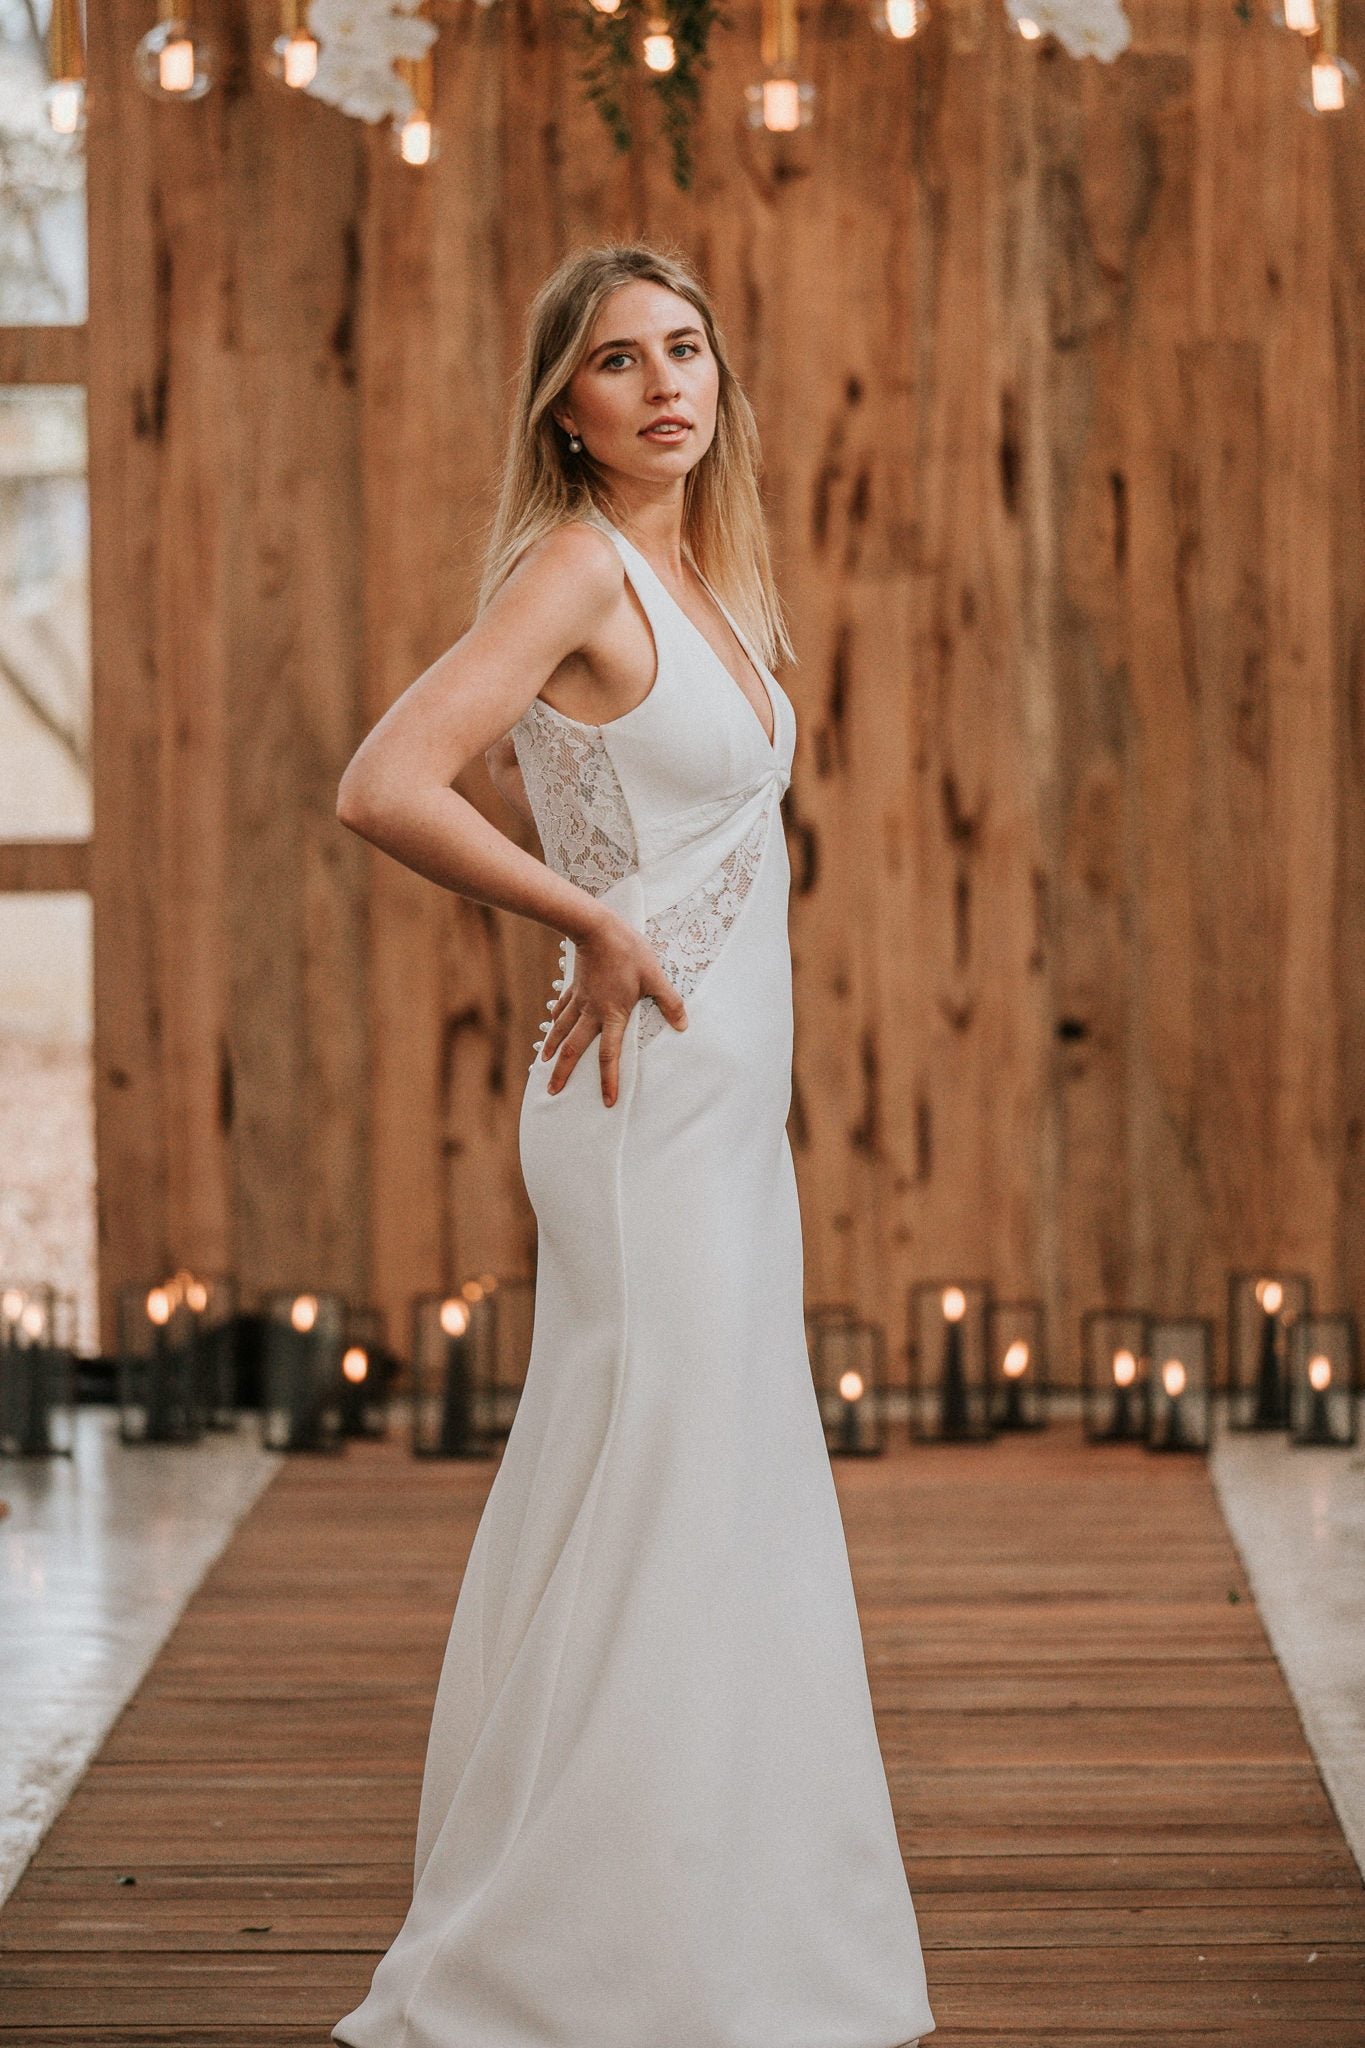 Jillian by Samantha Wynne | Halter Wedding Dress with Sheer Lace Panel Detail